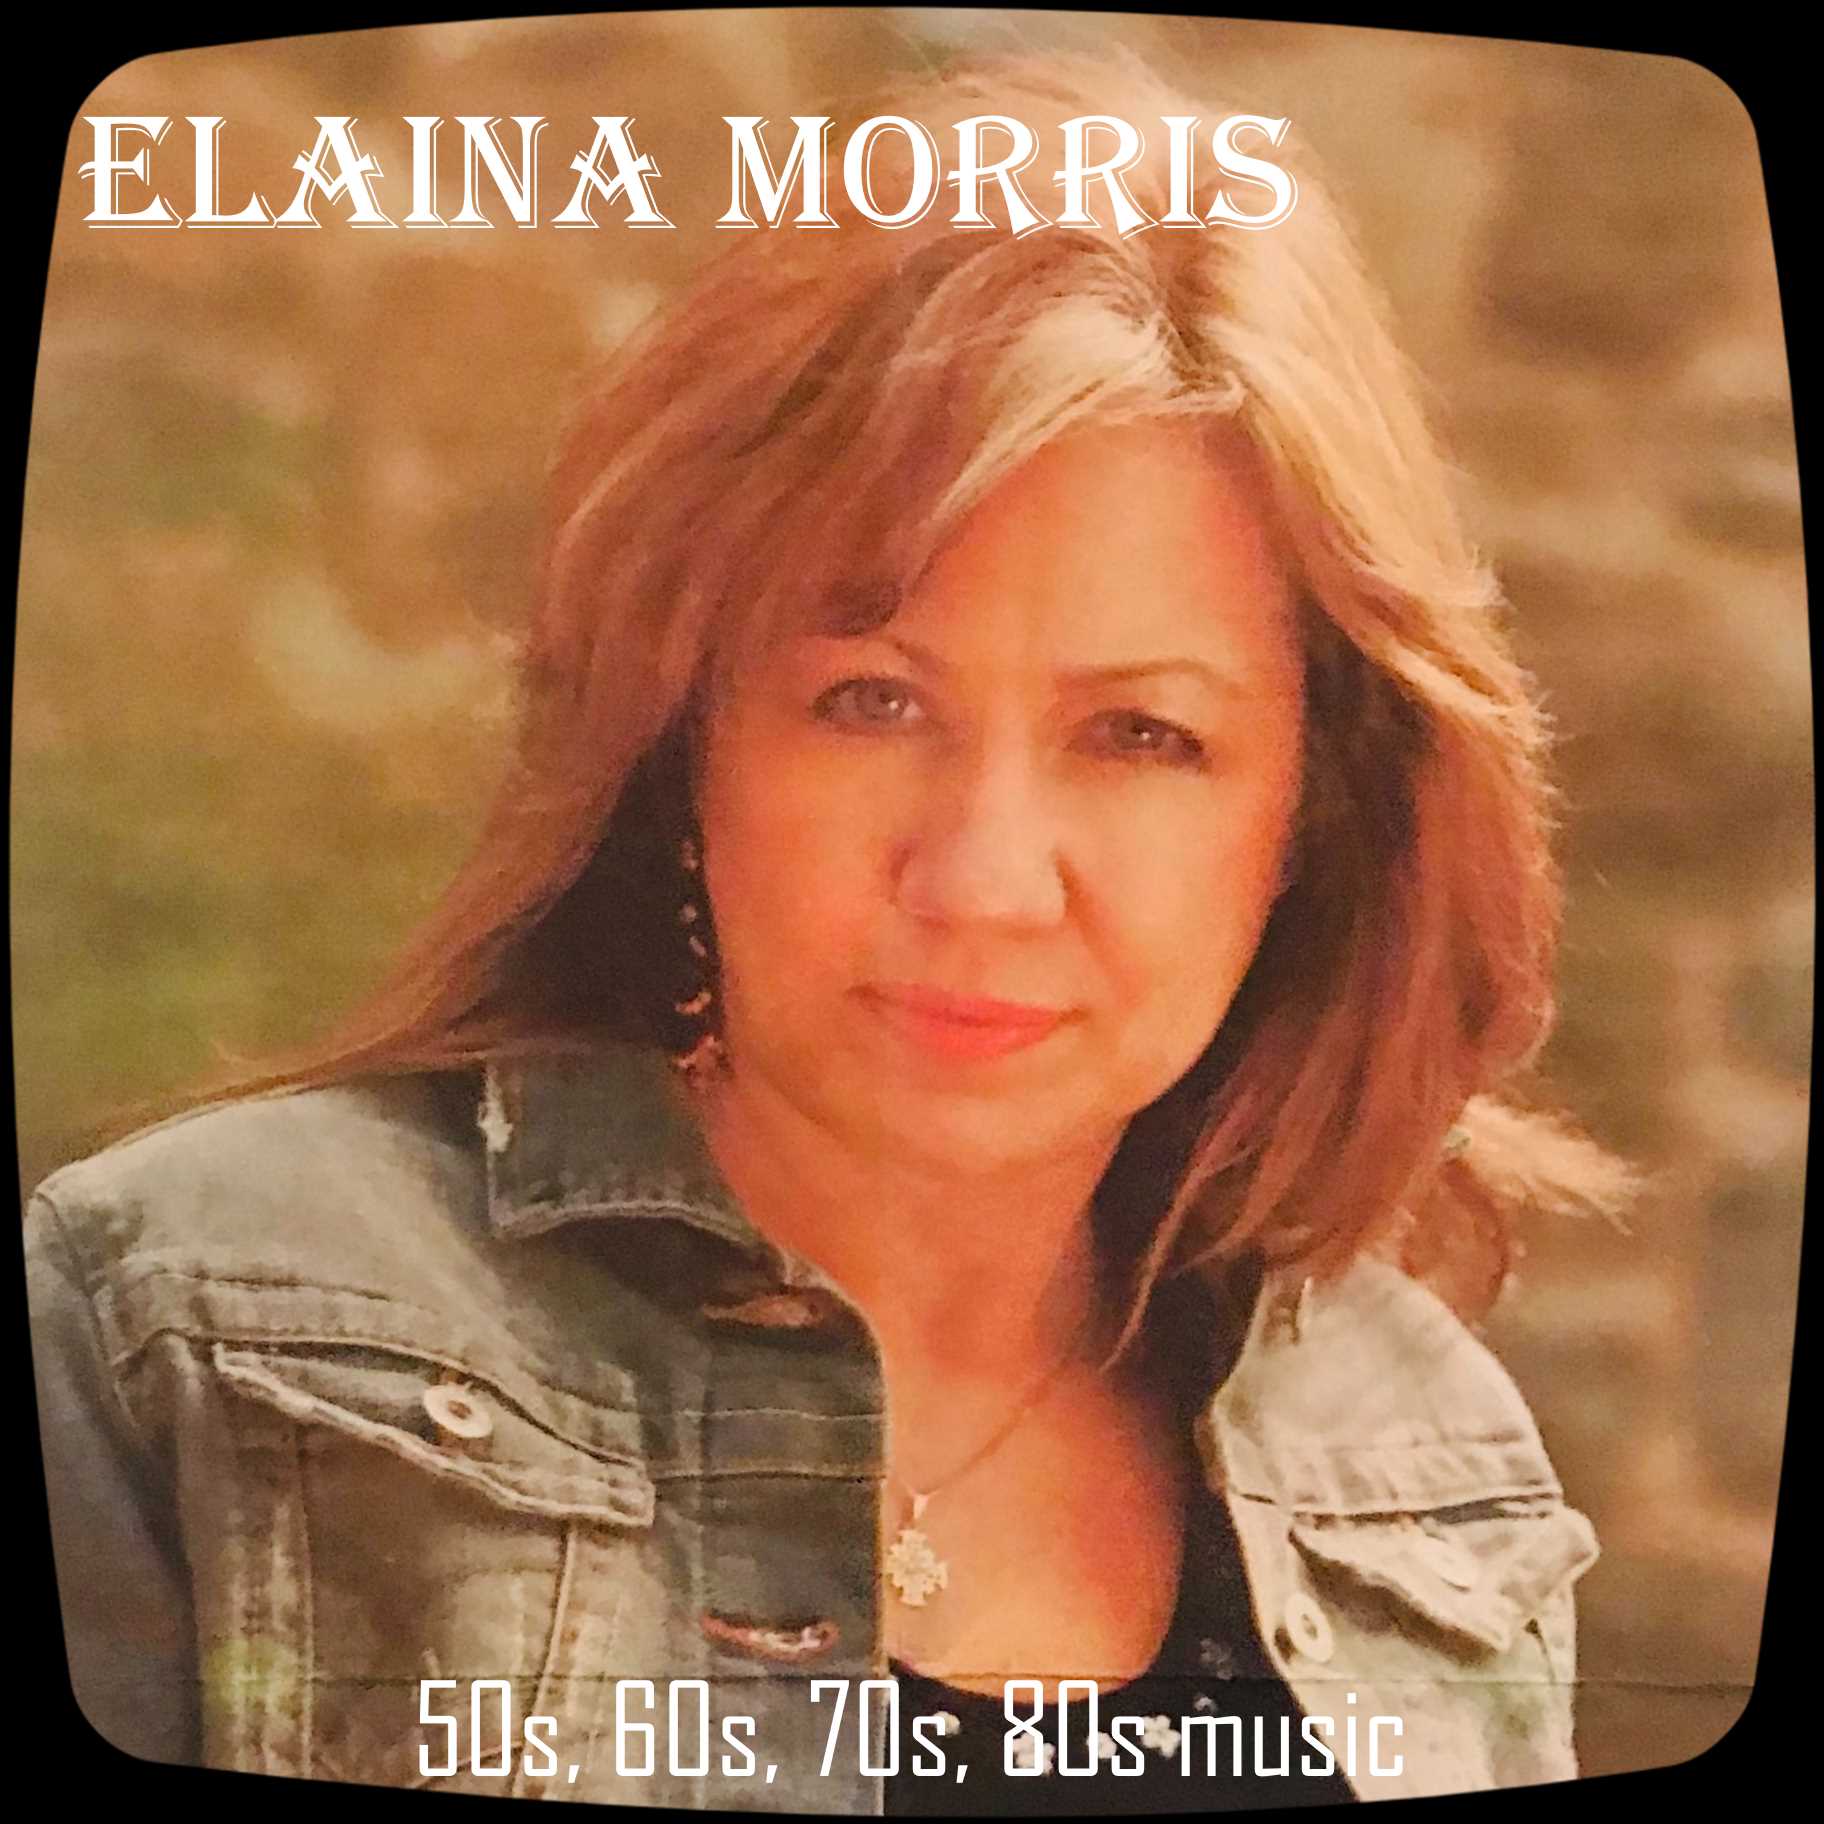 Elaina Morris Female Vocalist Co Durham